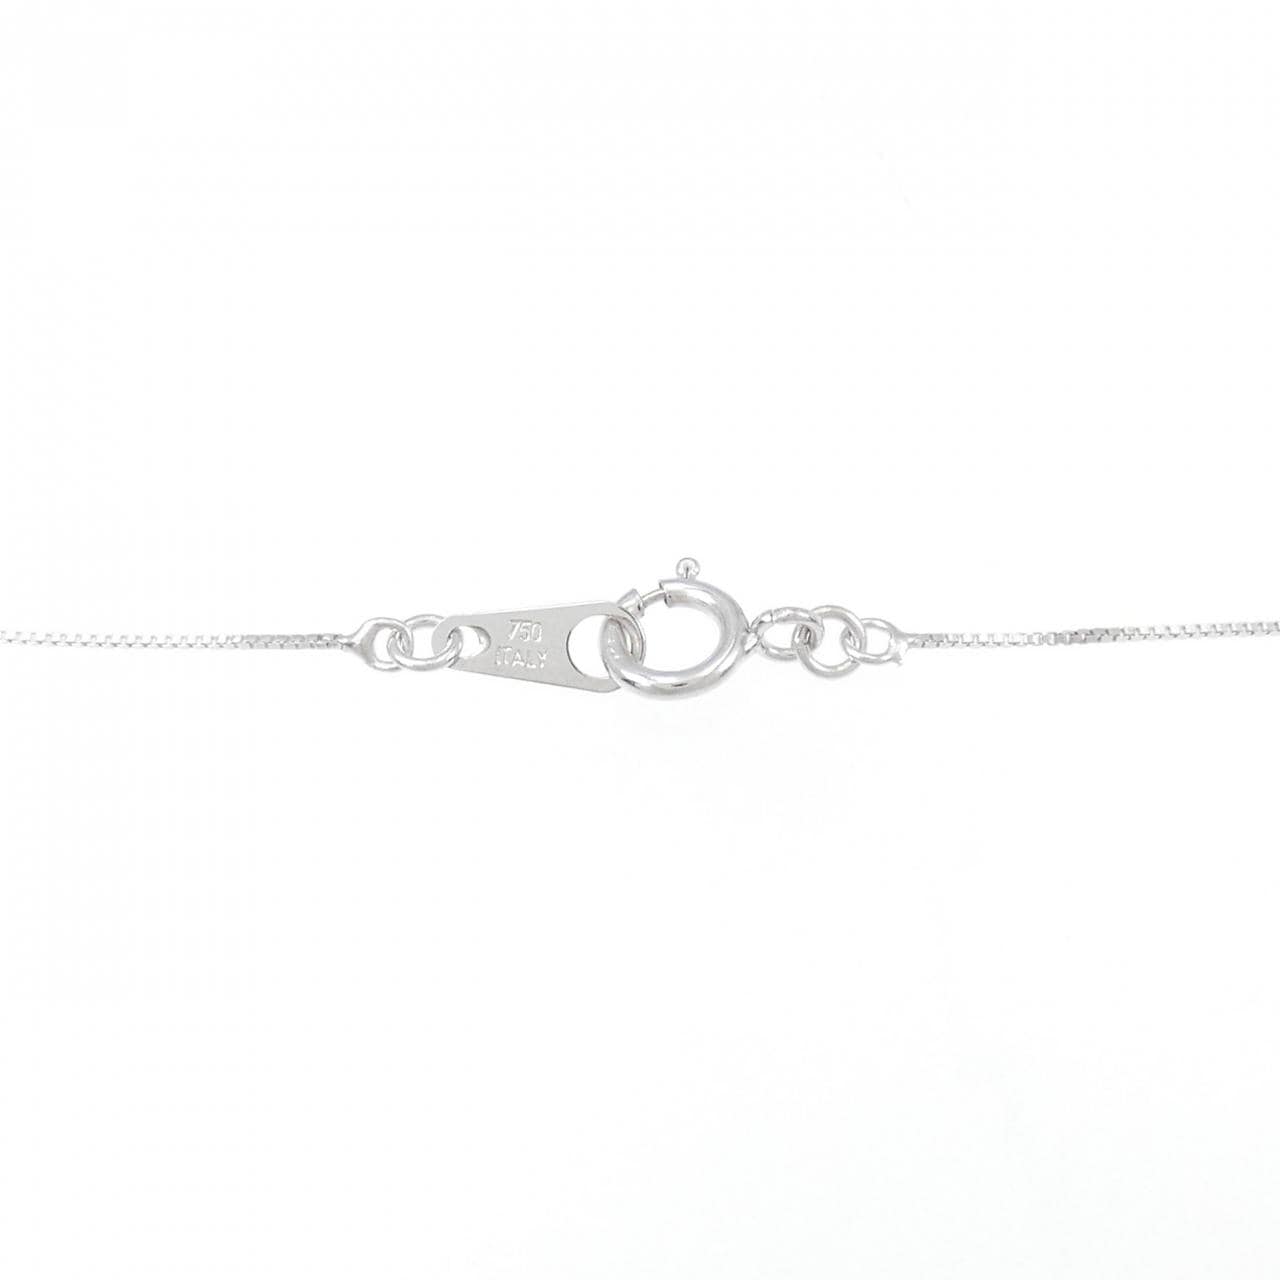 K18WG/750WG Diamond Necklace 0.06CT